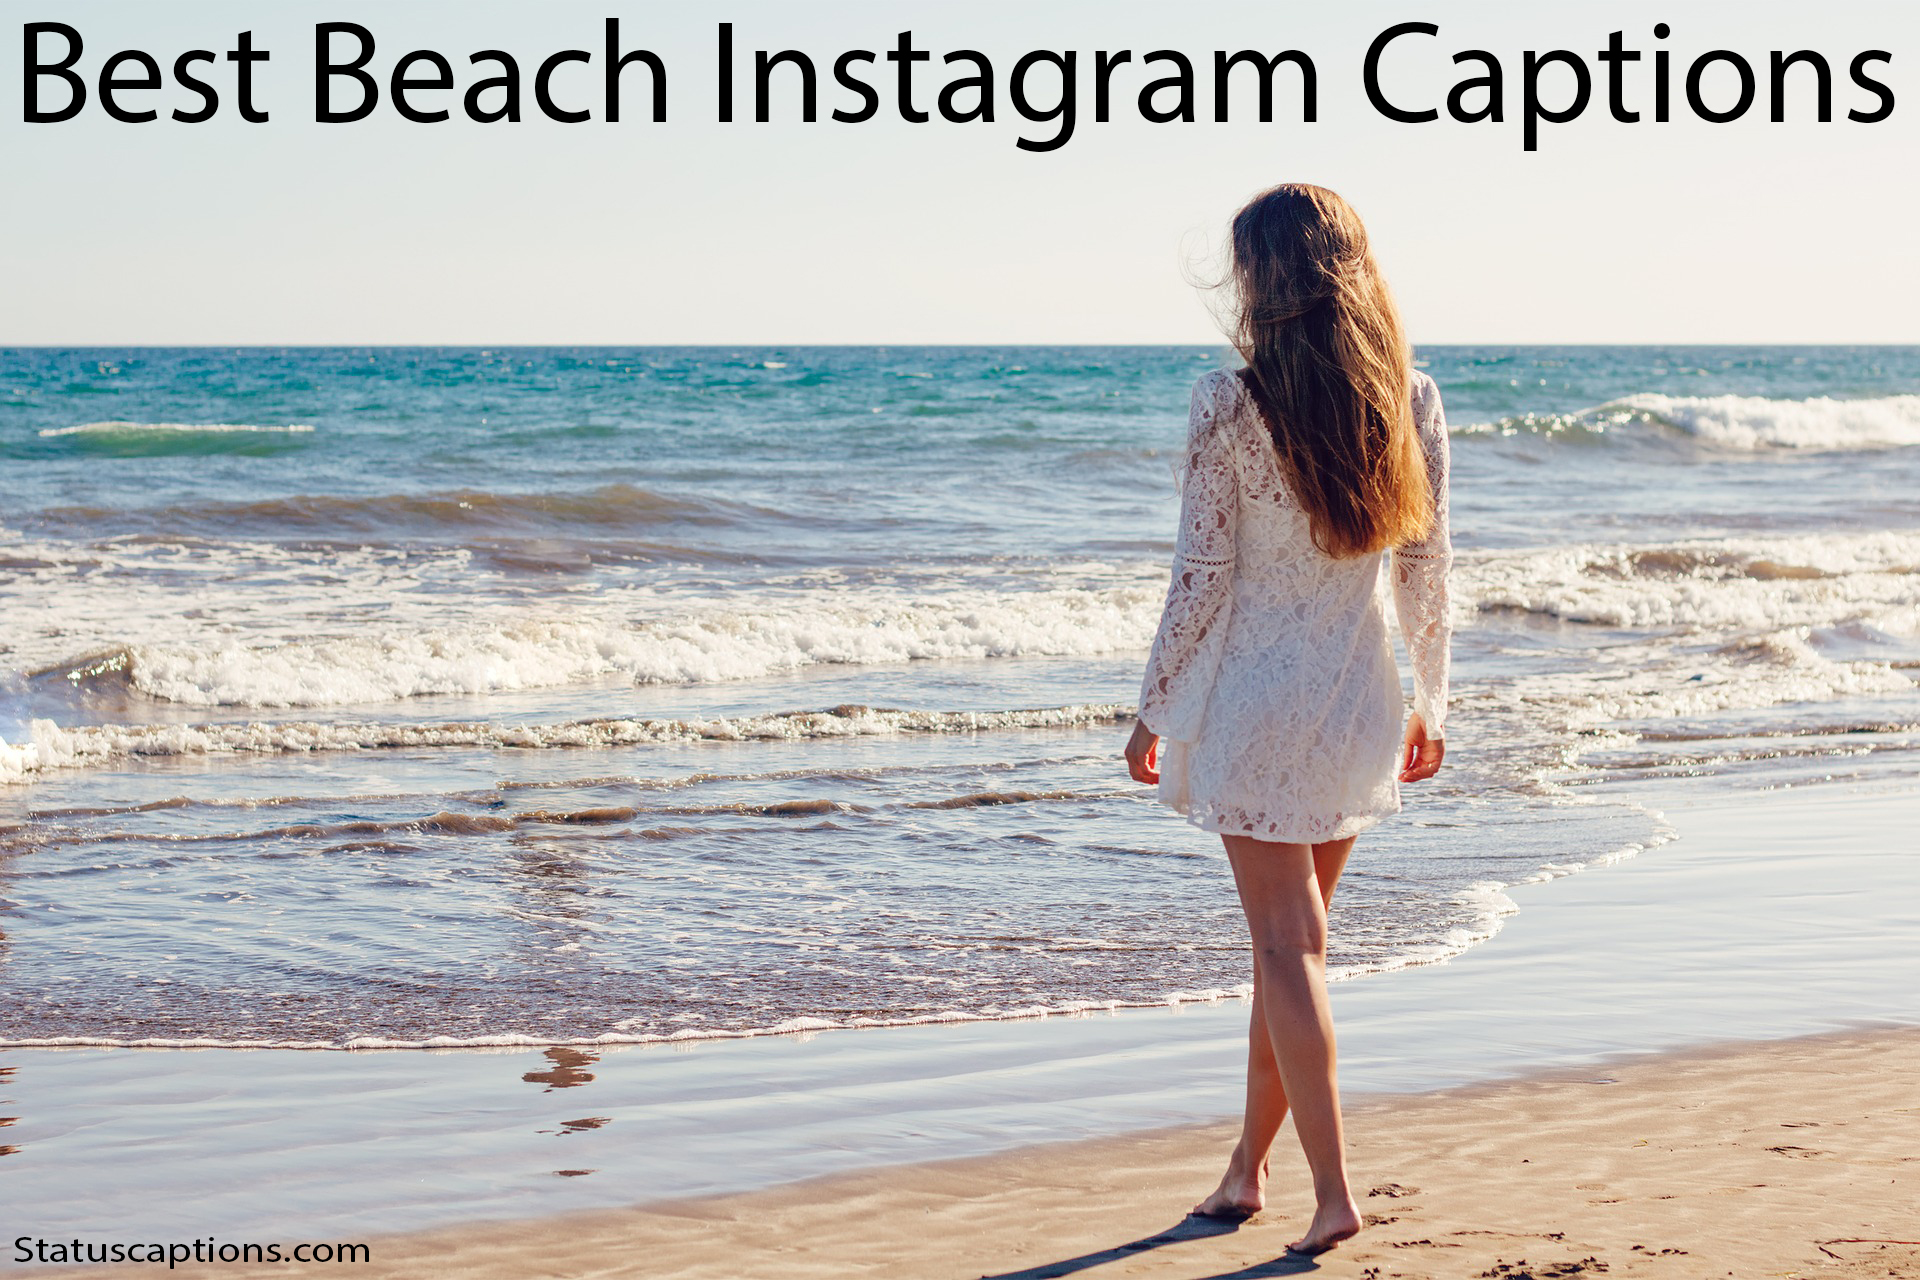 200 Best Beach Instagram Captions 2019 For Photo Summer Videos